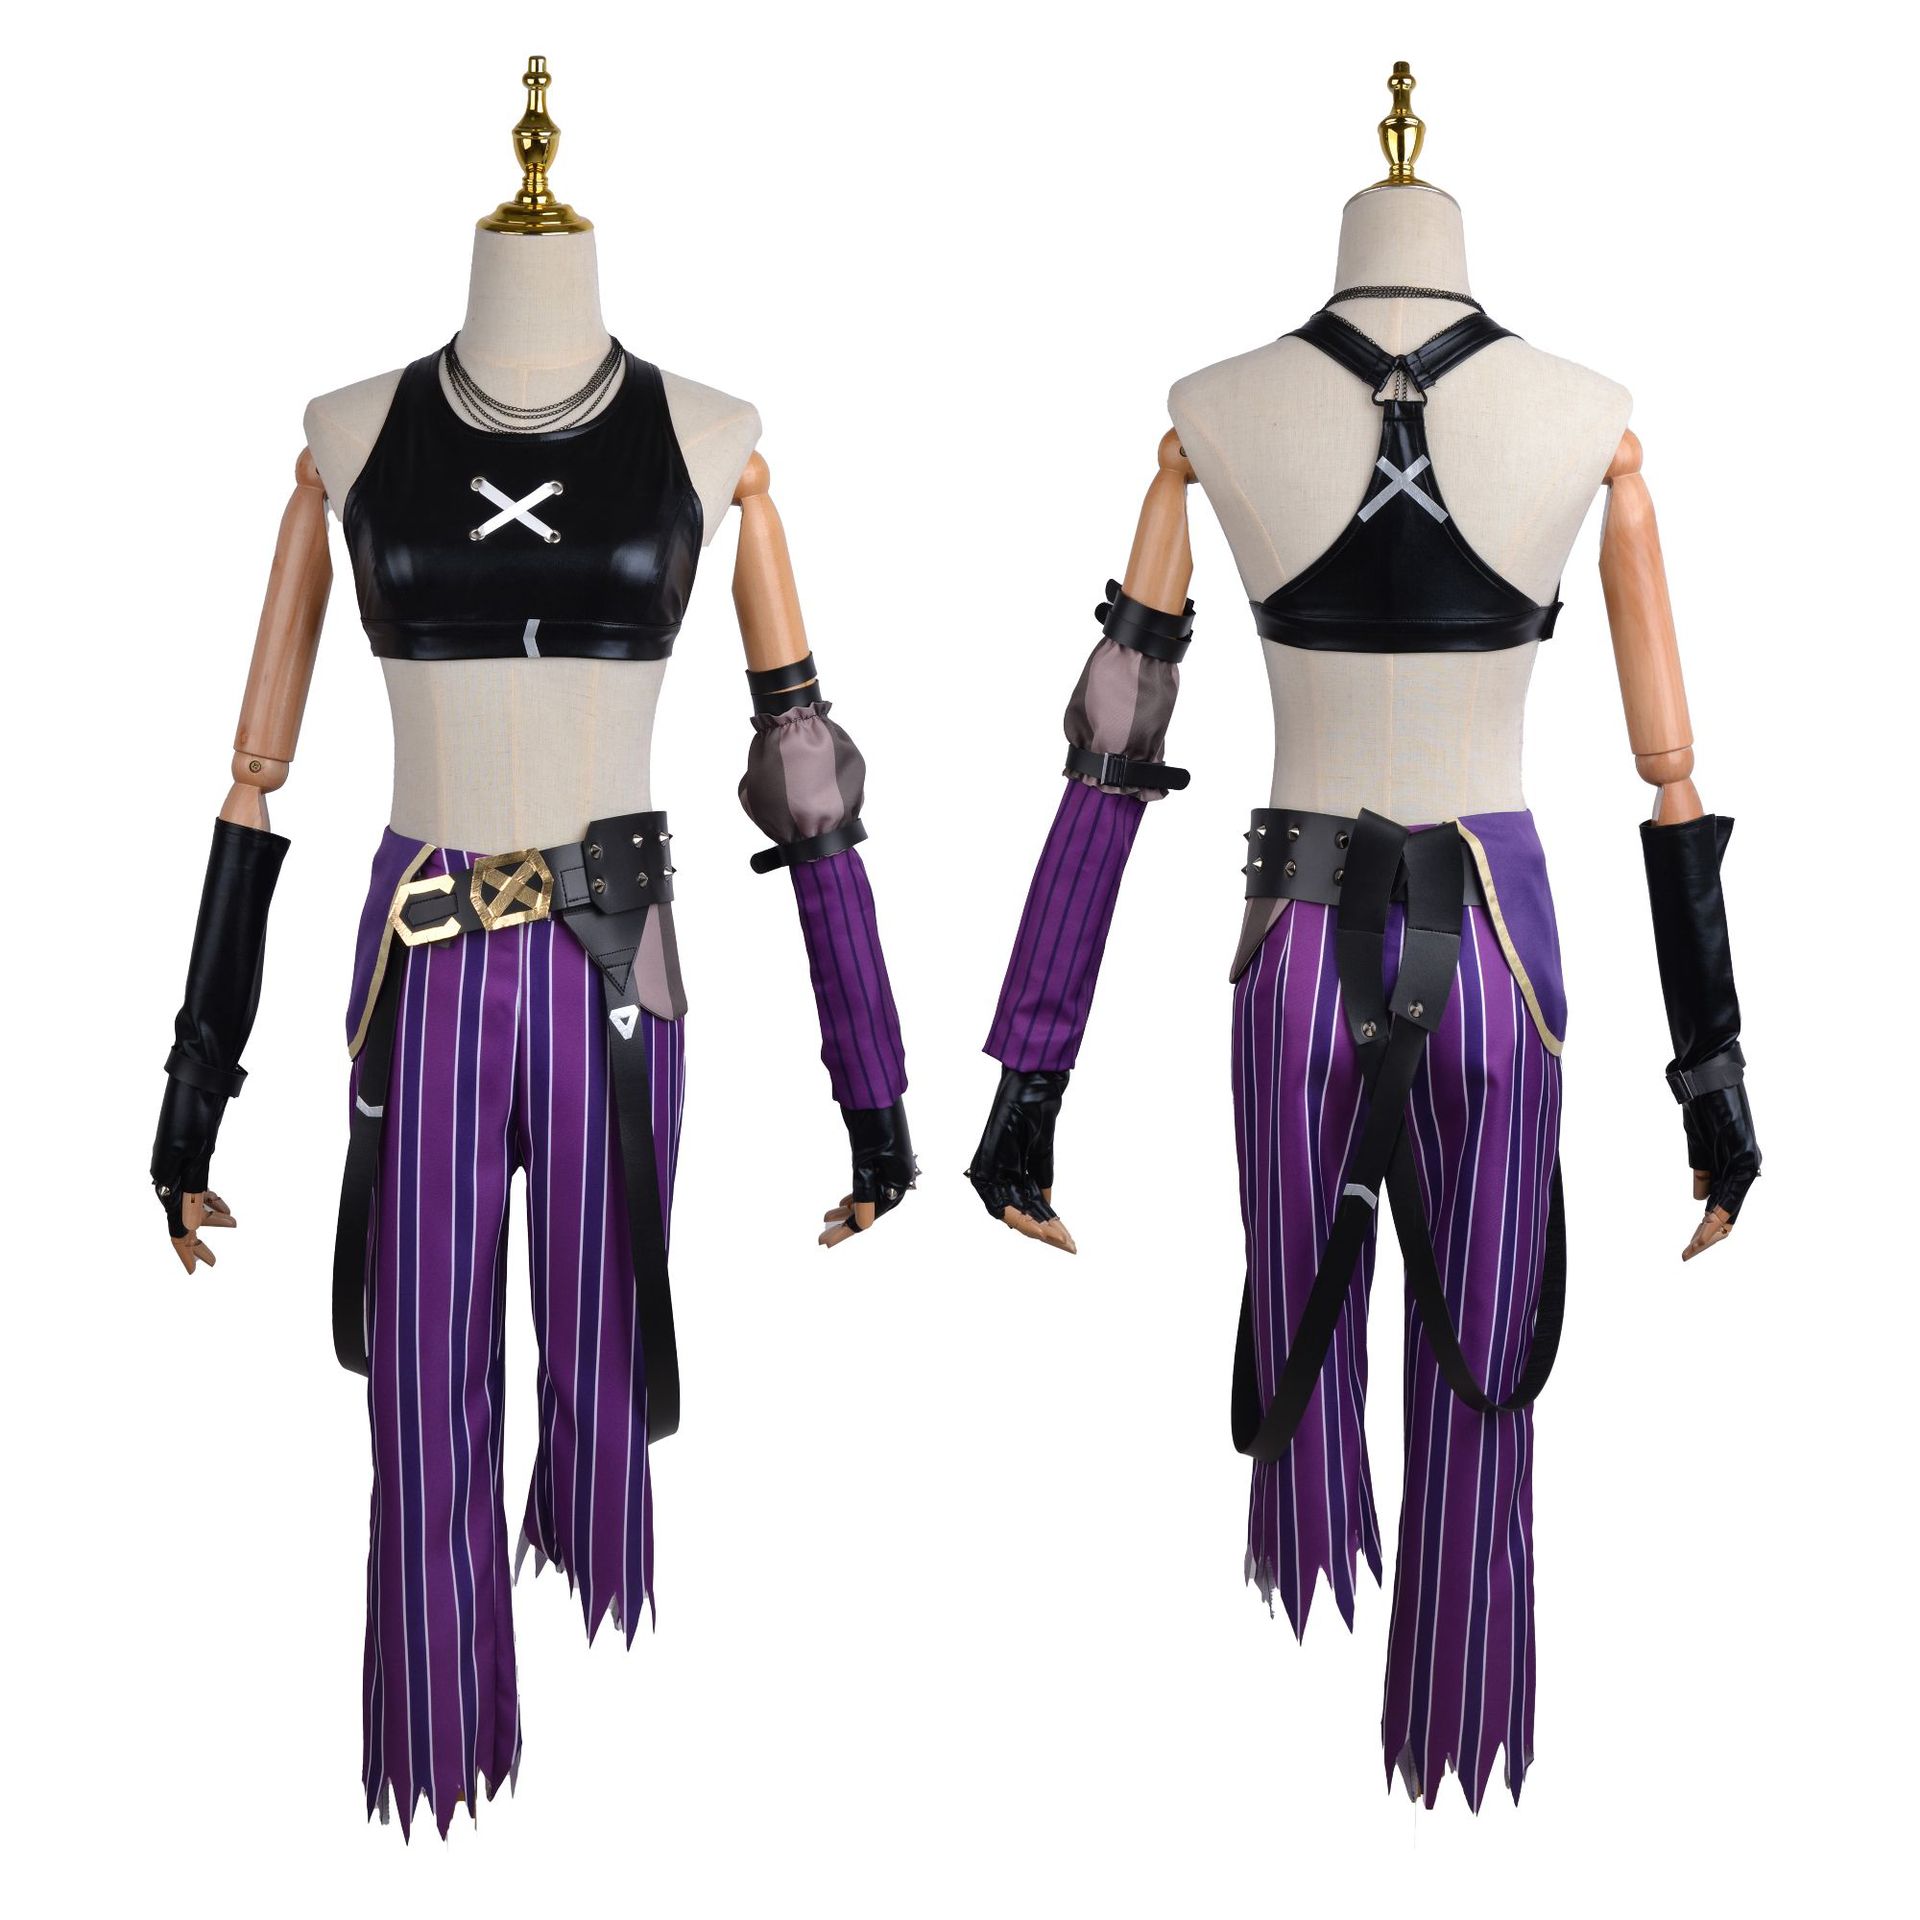 Lol jinx cosplay Frauenkleidung Kostüm – lila